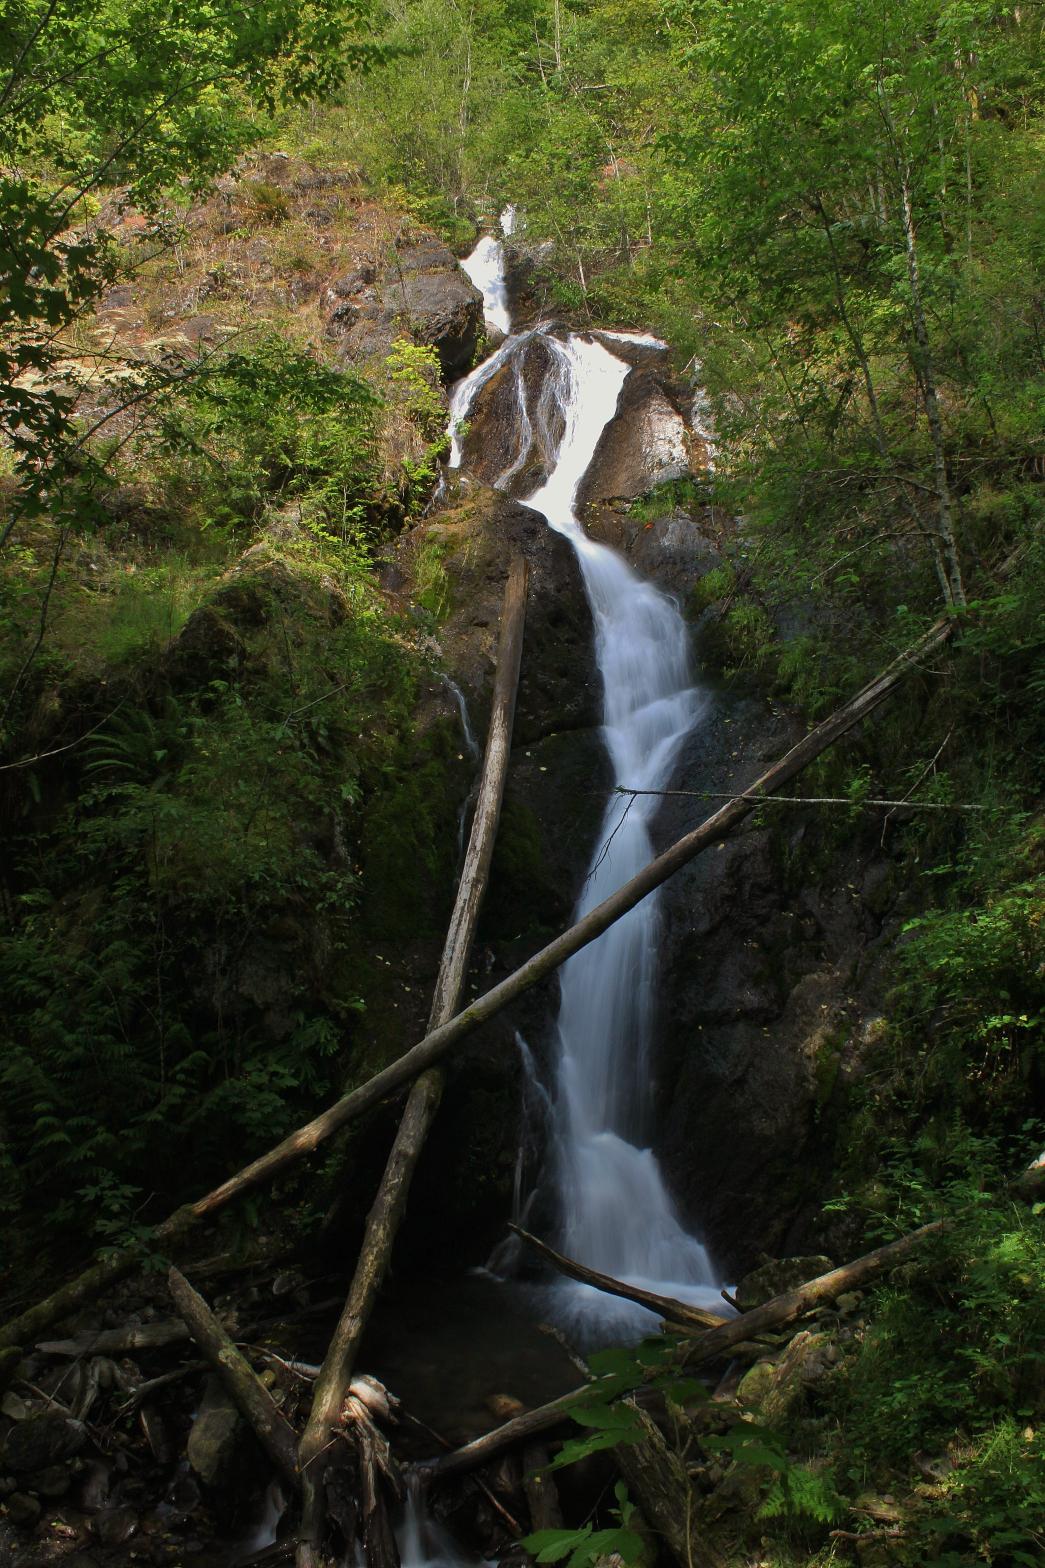 Halhomish Falls at lower volume